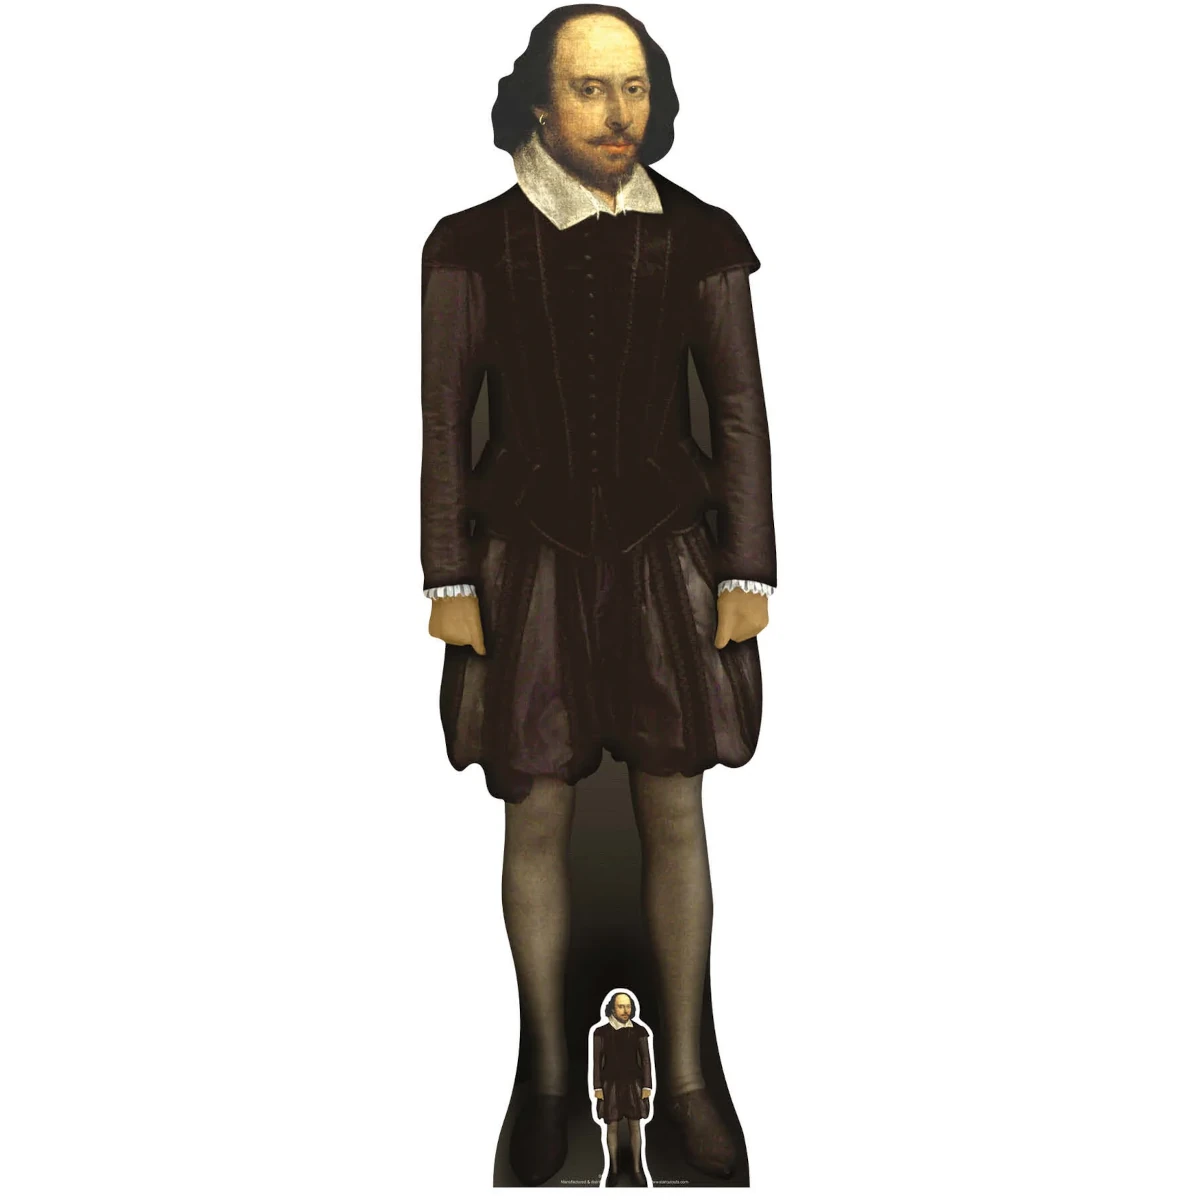 SC179 William Shakespeare (English Playwright) Lifesize + Mini Cardboard Cutout Standee Front